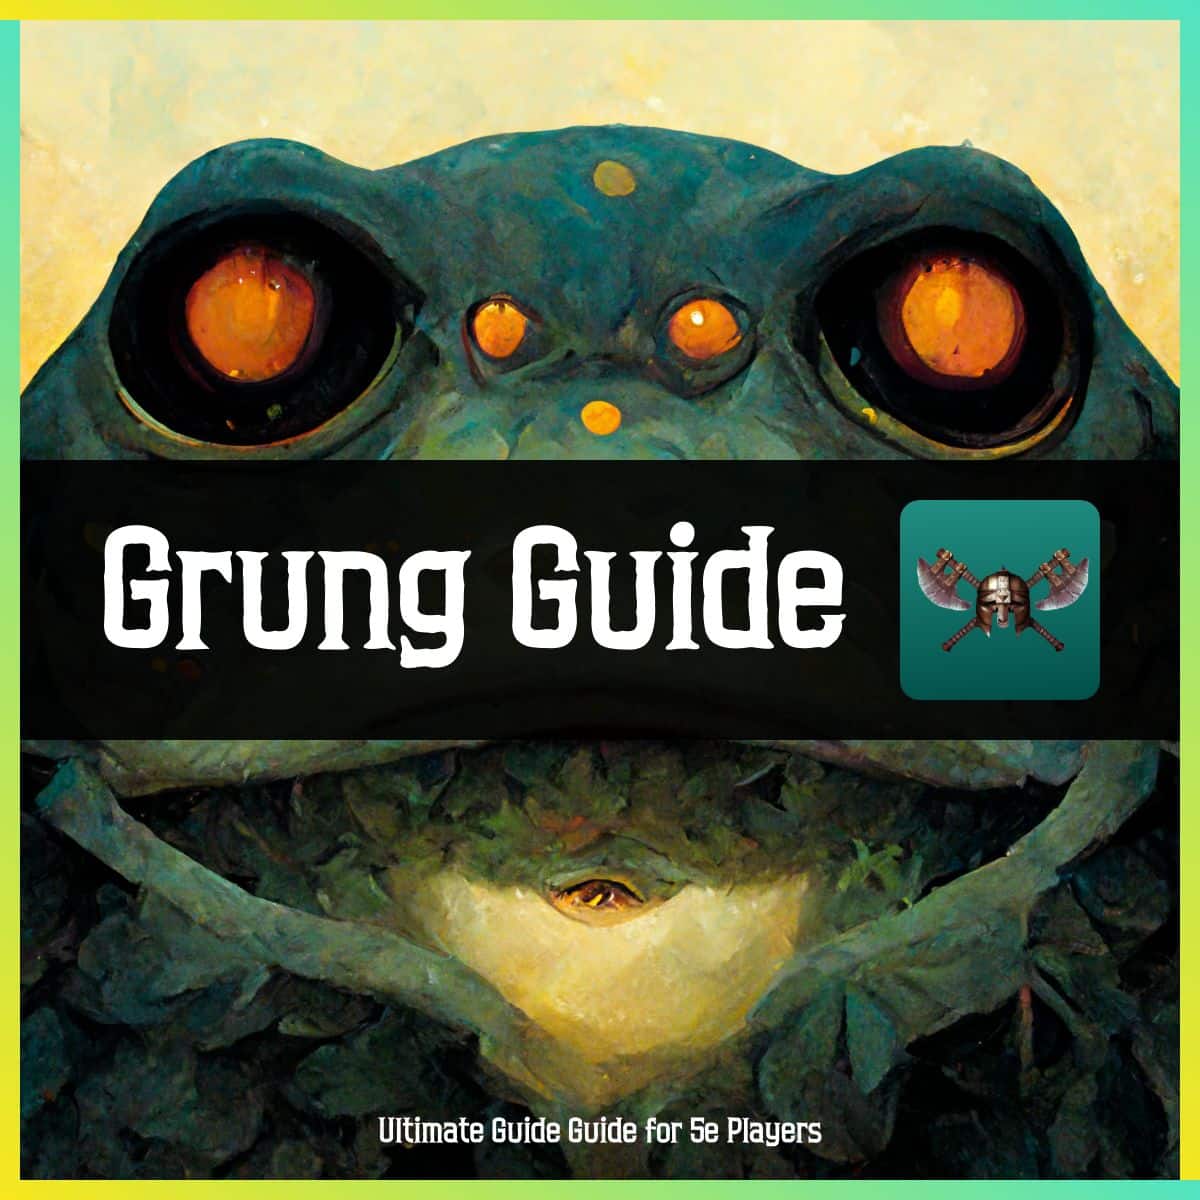 Grung Guide for DND 5e